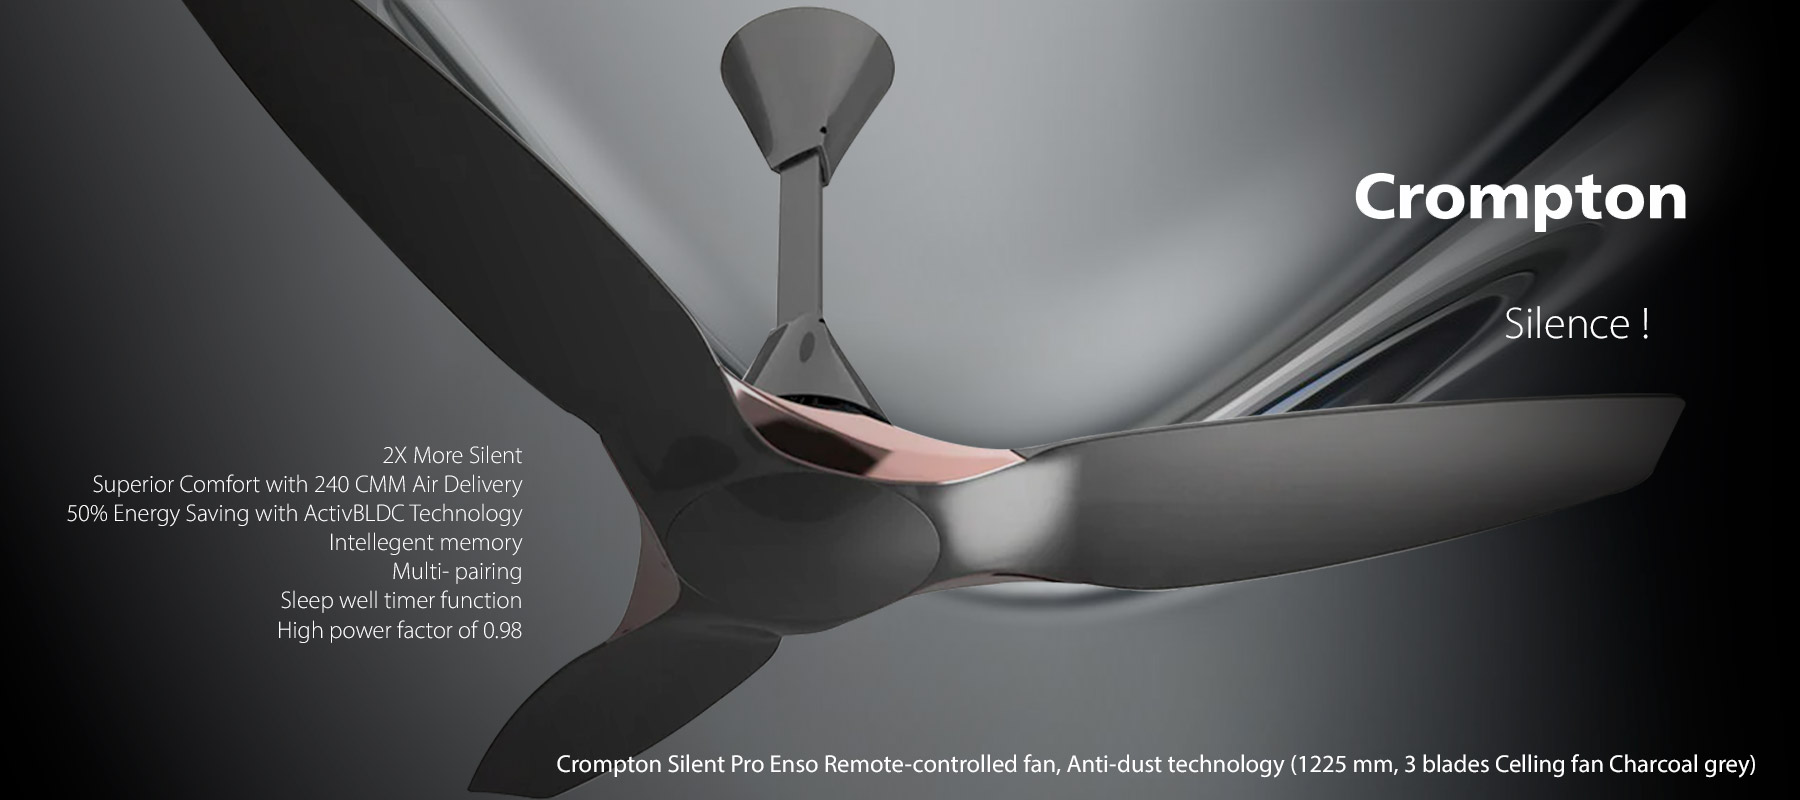 Crompton Silent Pro Enso Remote-controlled fan, Anti-dust technology (1225 mm, 3 blades Celling fan Charcoal grey)